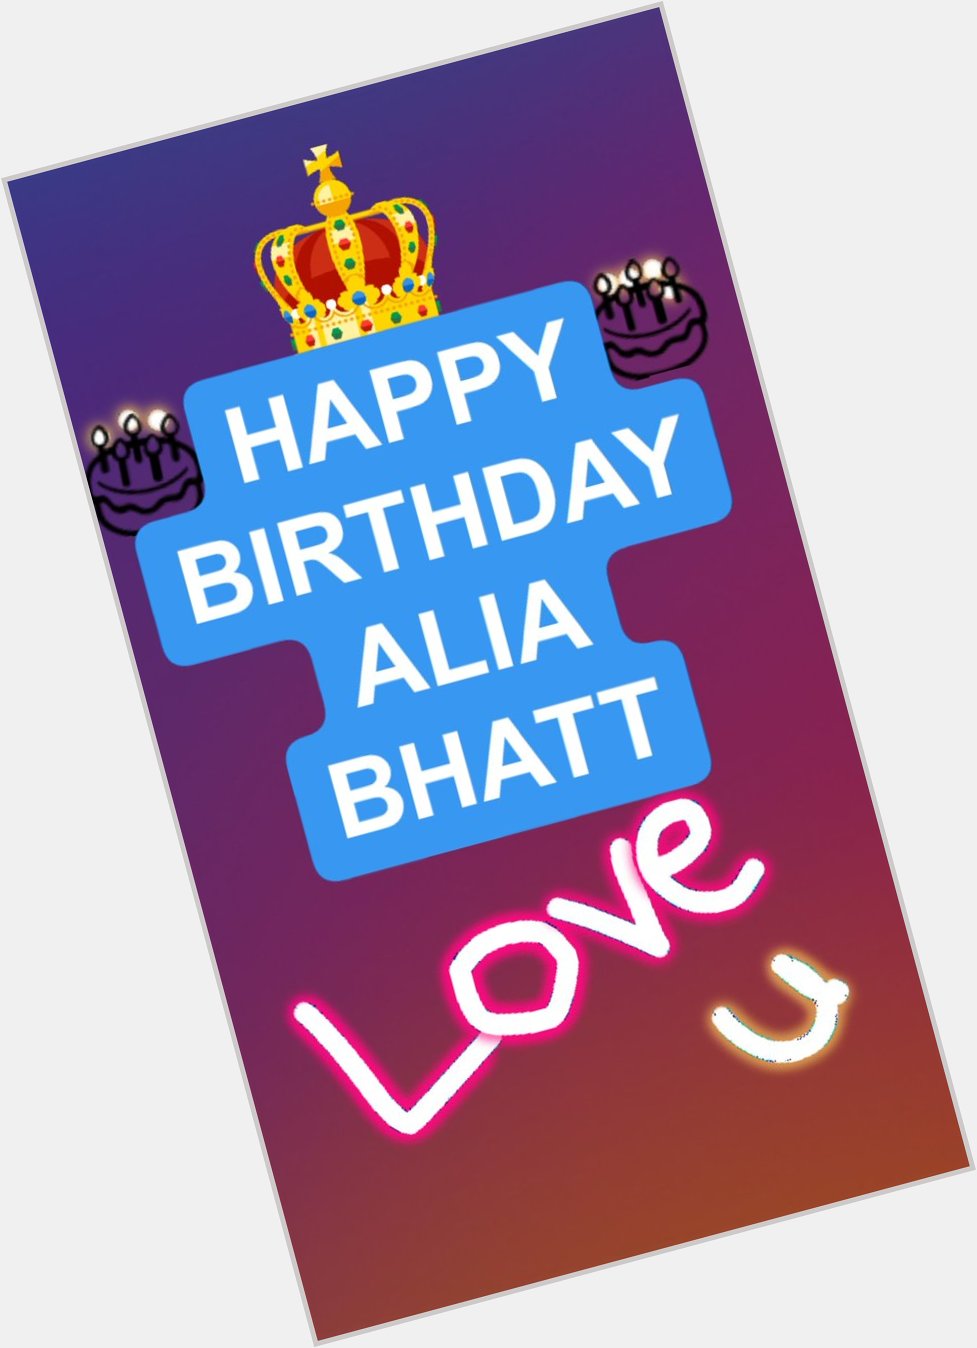 Happy Birthday
Alia Bhatt 